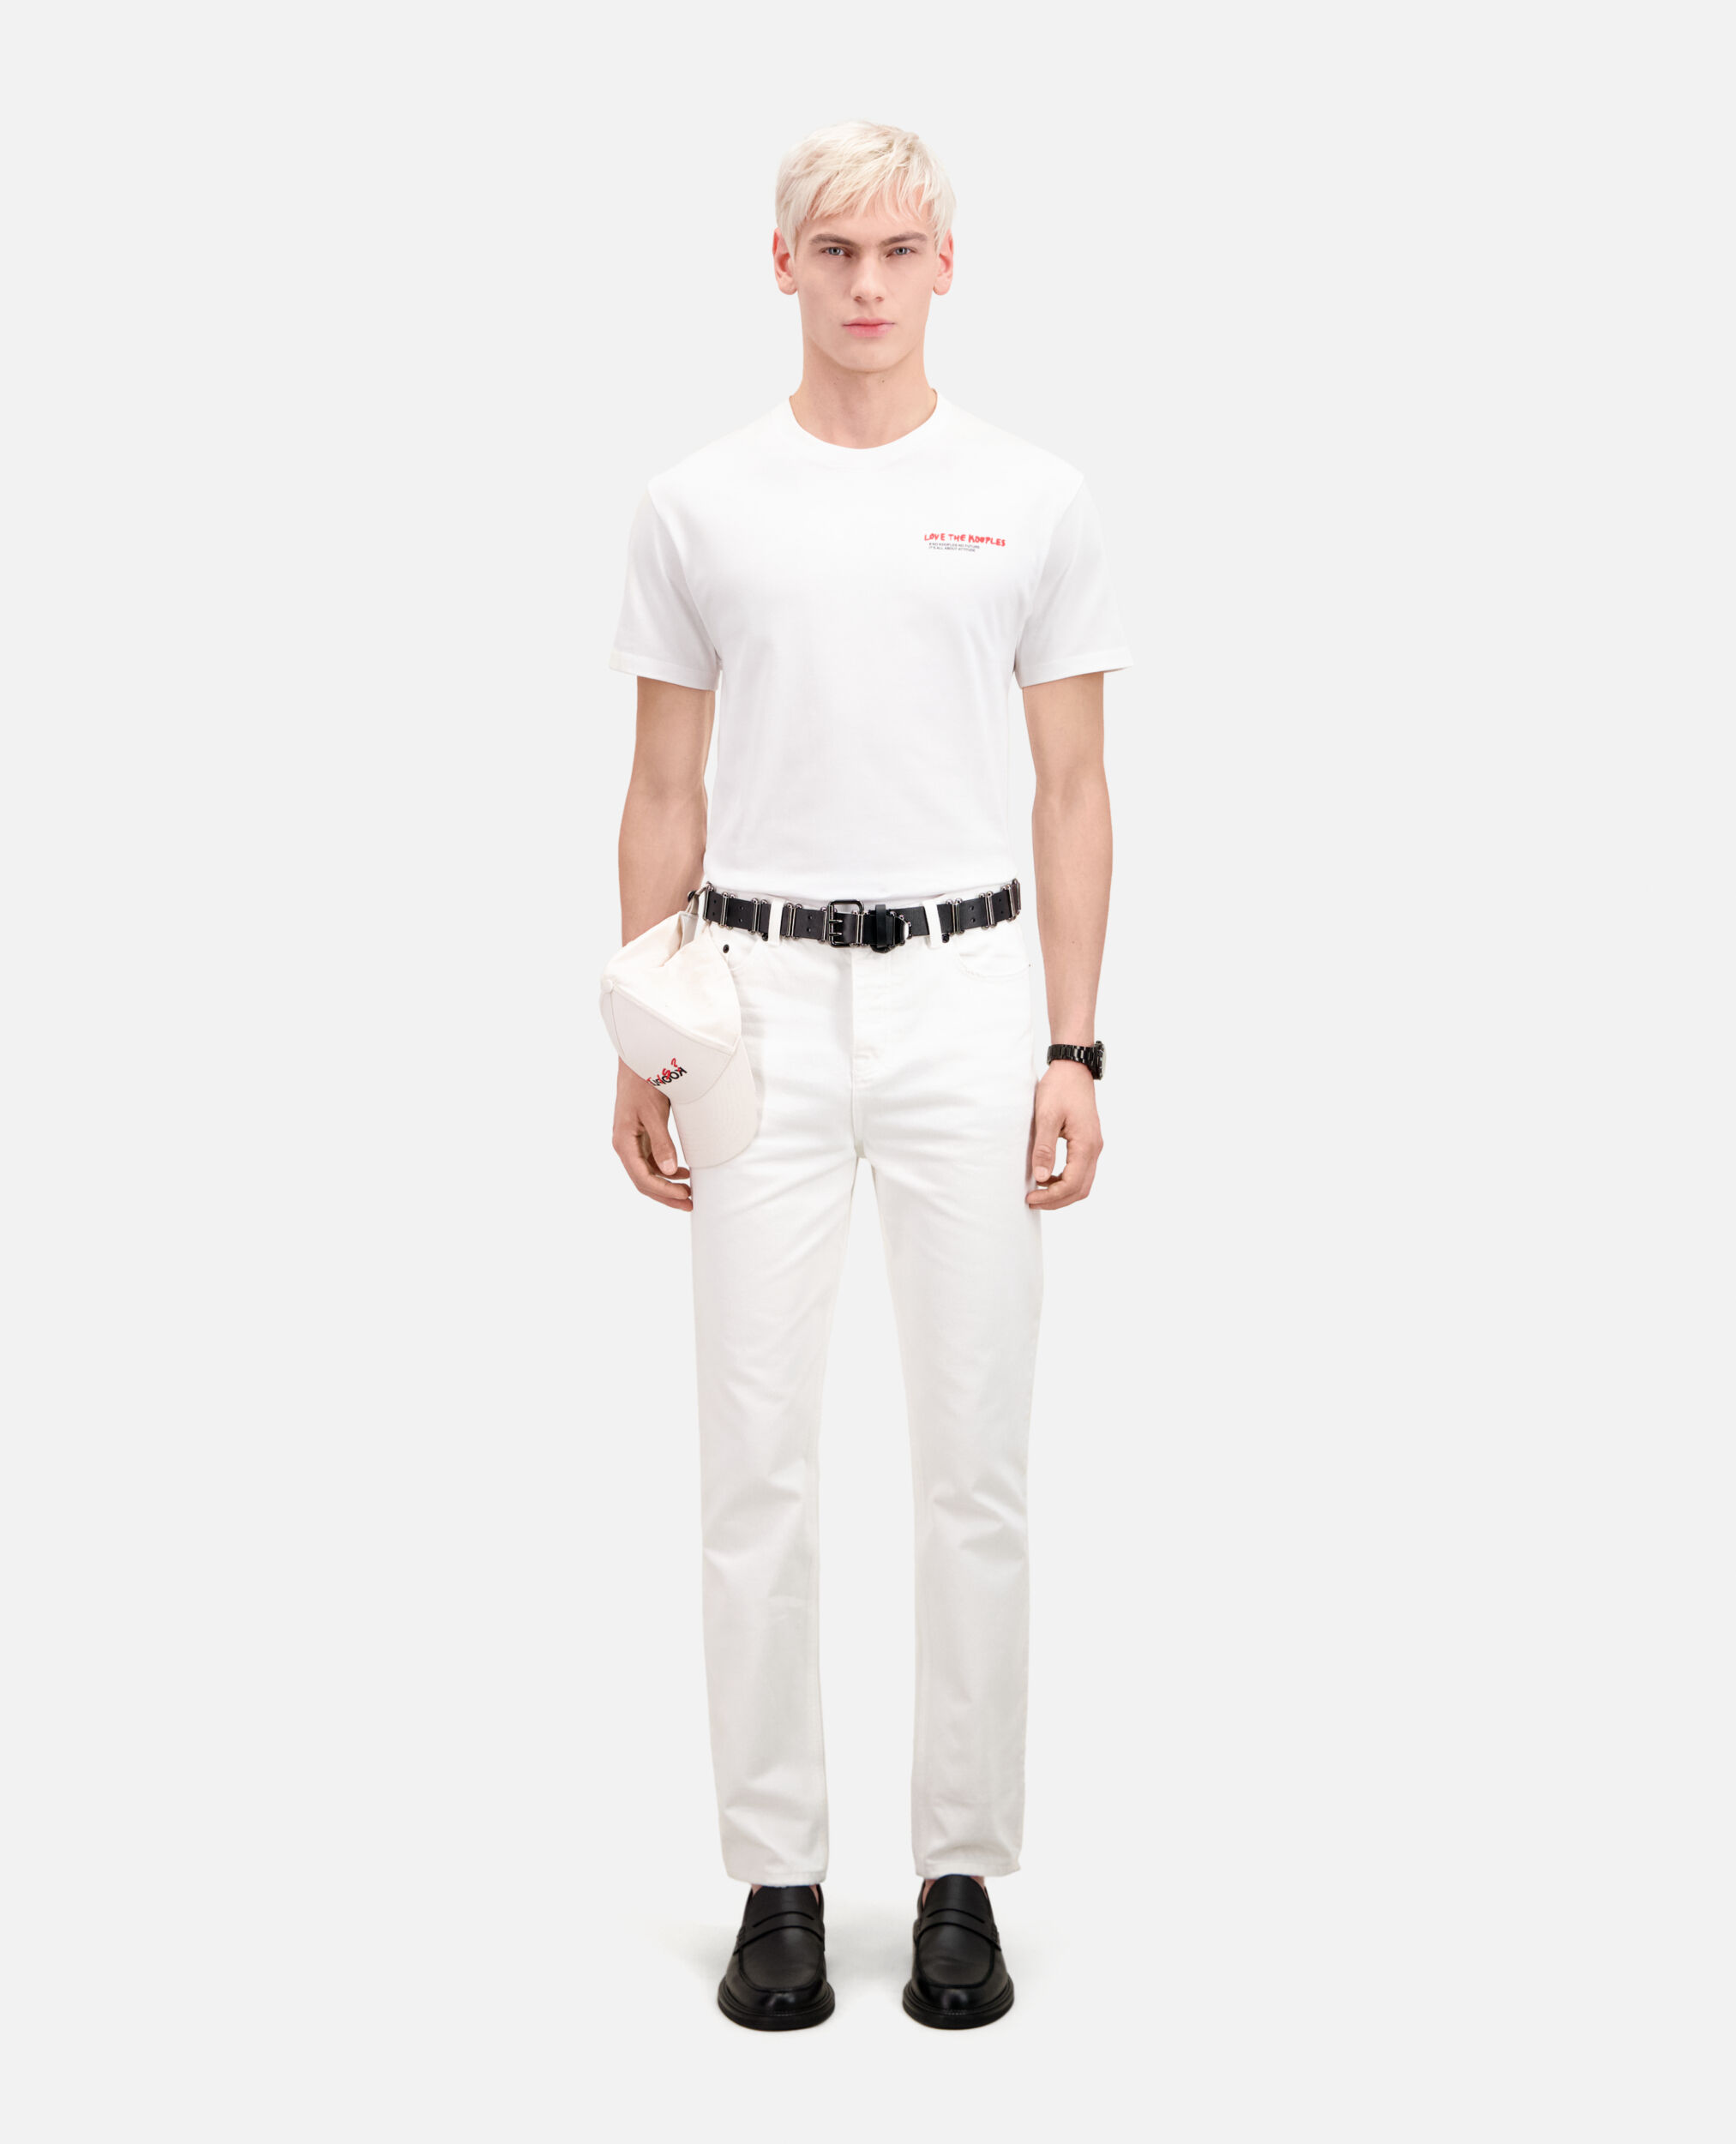 Camiseta I Love Kooples blanca para hombre, WHITE, hi-res image number null